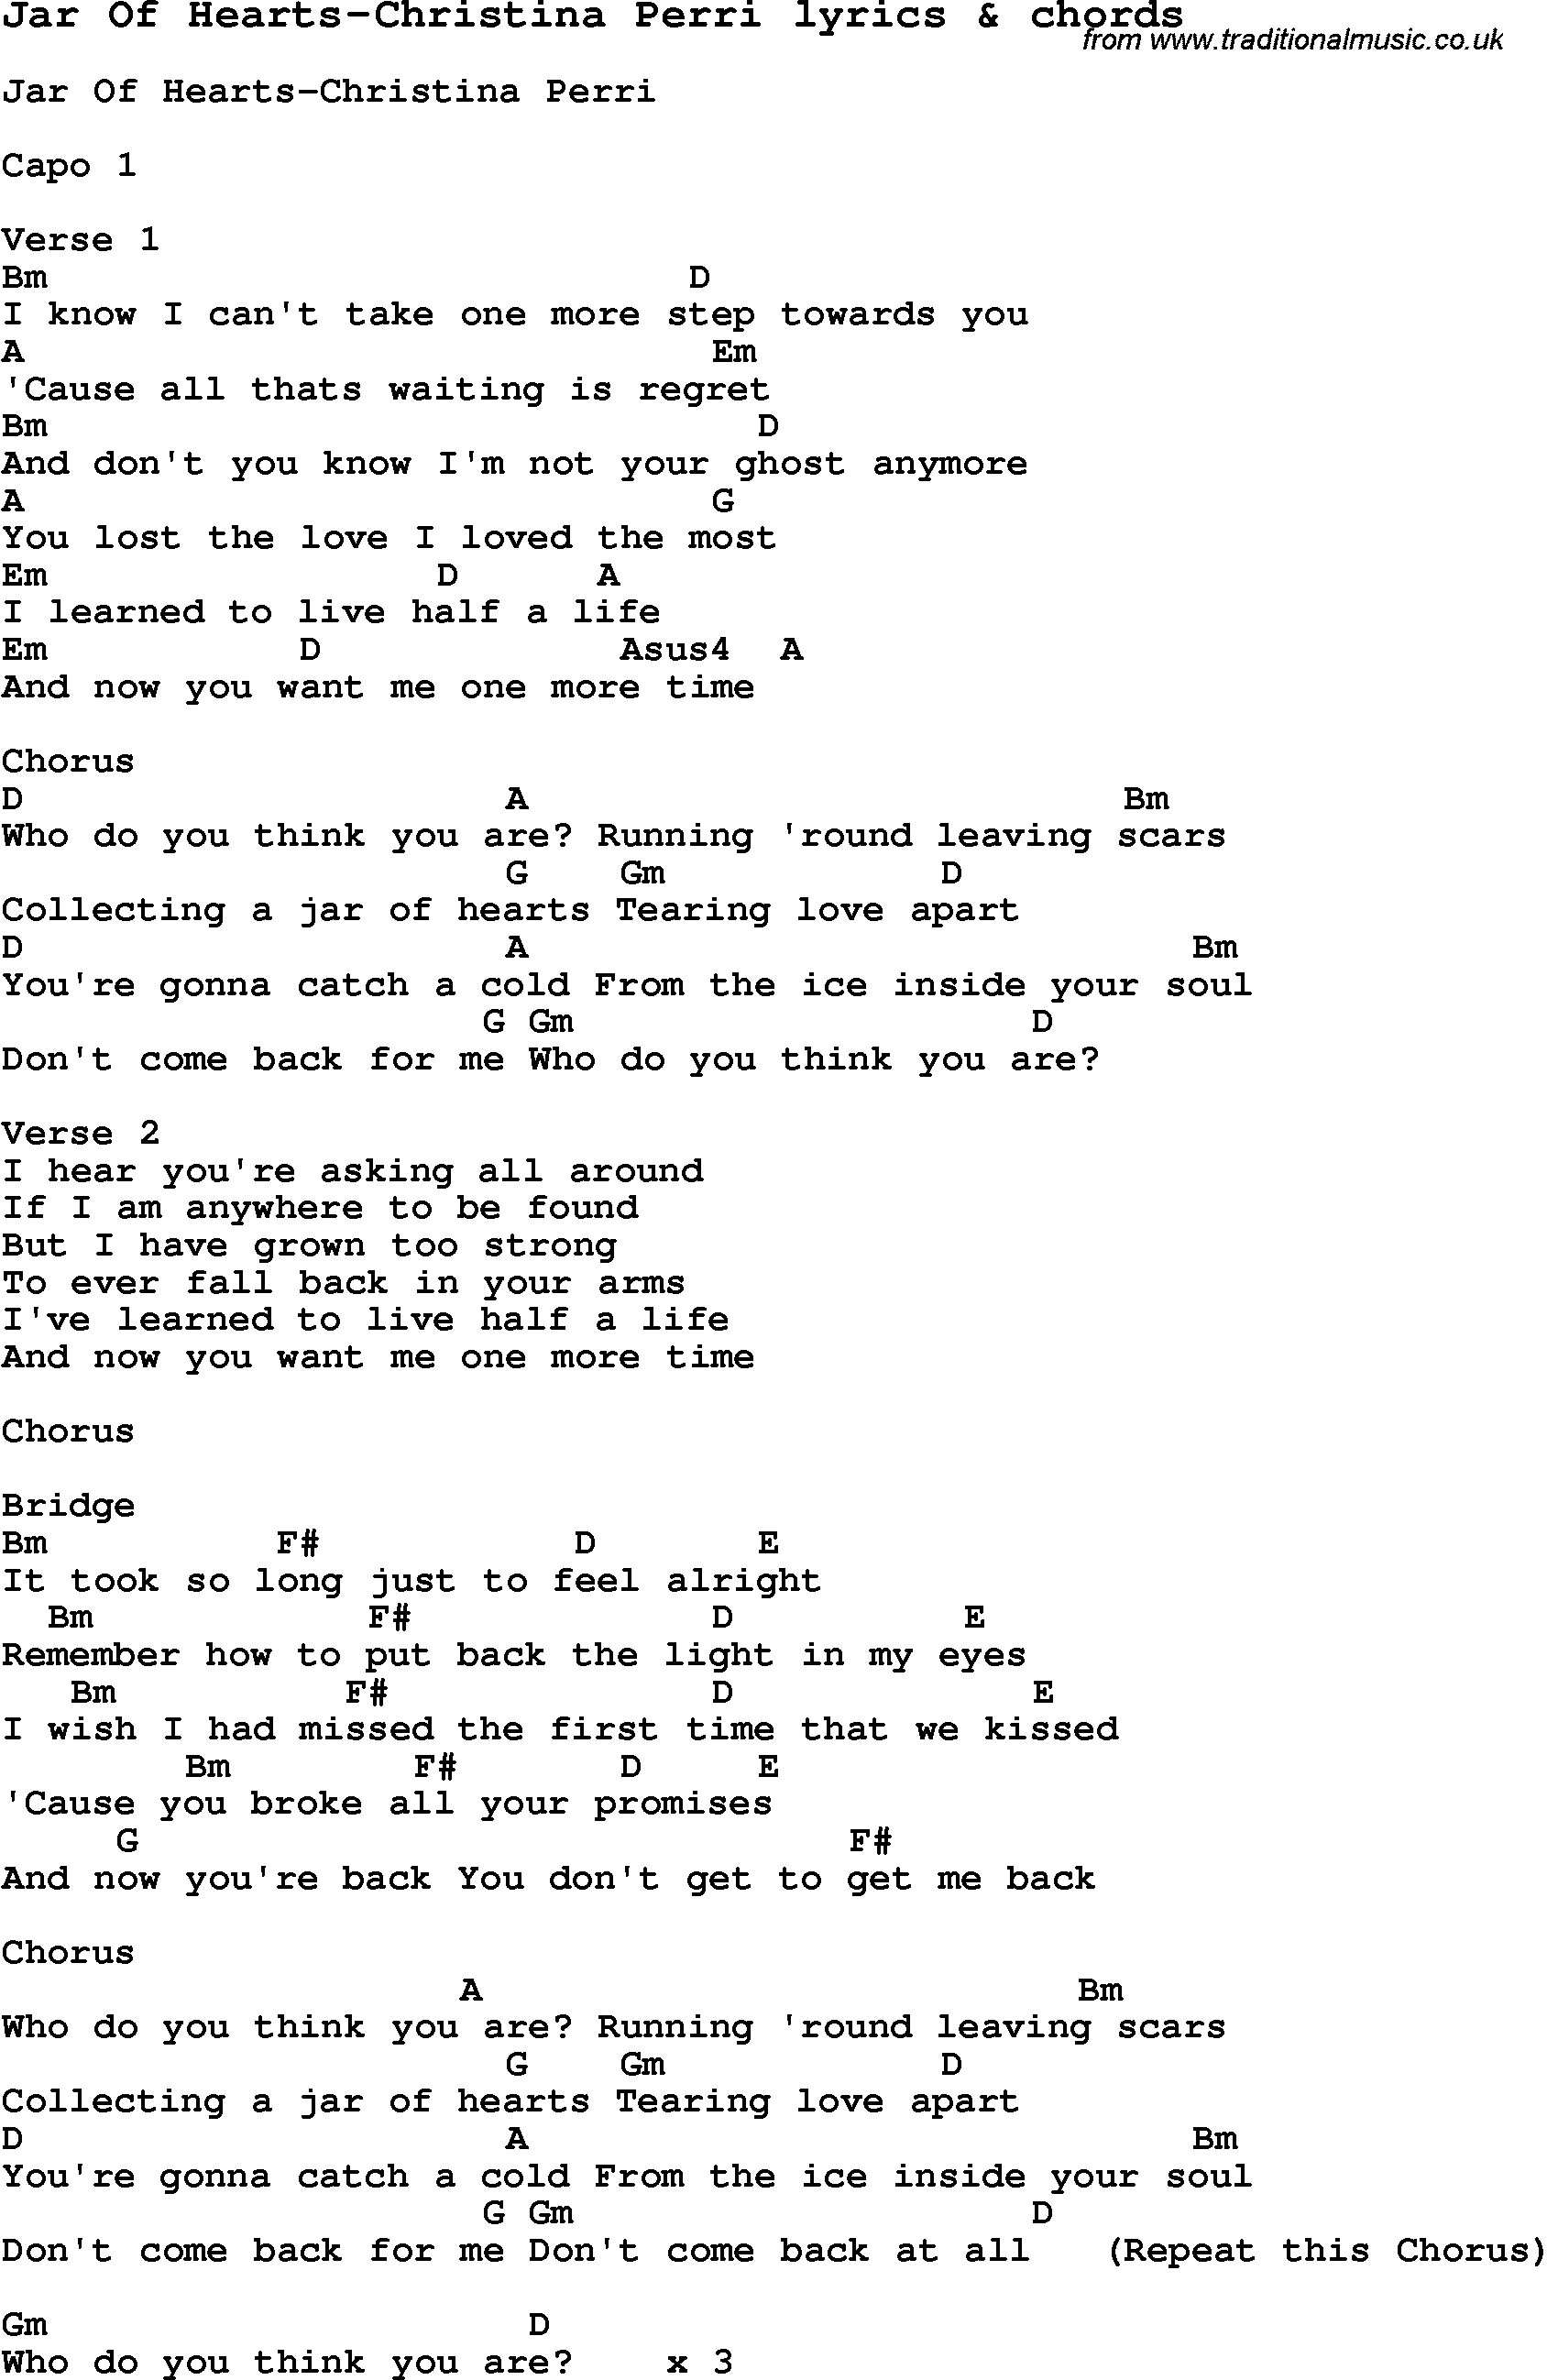 Love Song Lyrics for: Jar Of Hearts-Christina Perri with chords for Ukulele, Guitar Banjo etc.